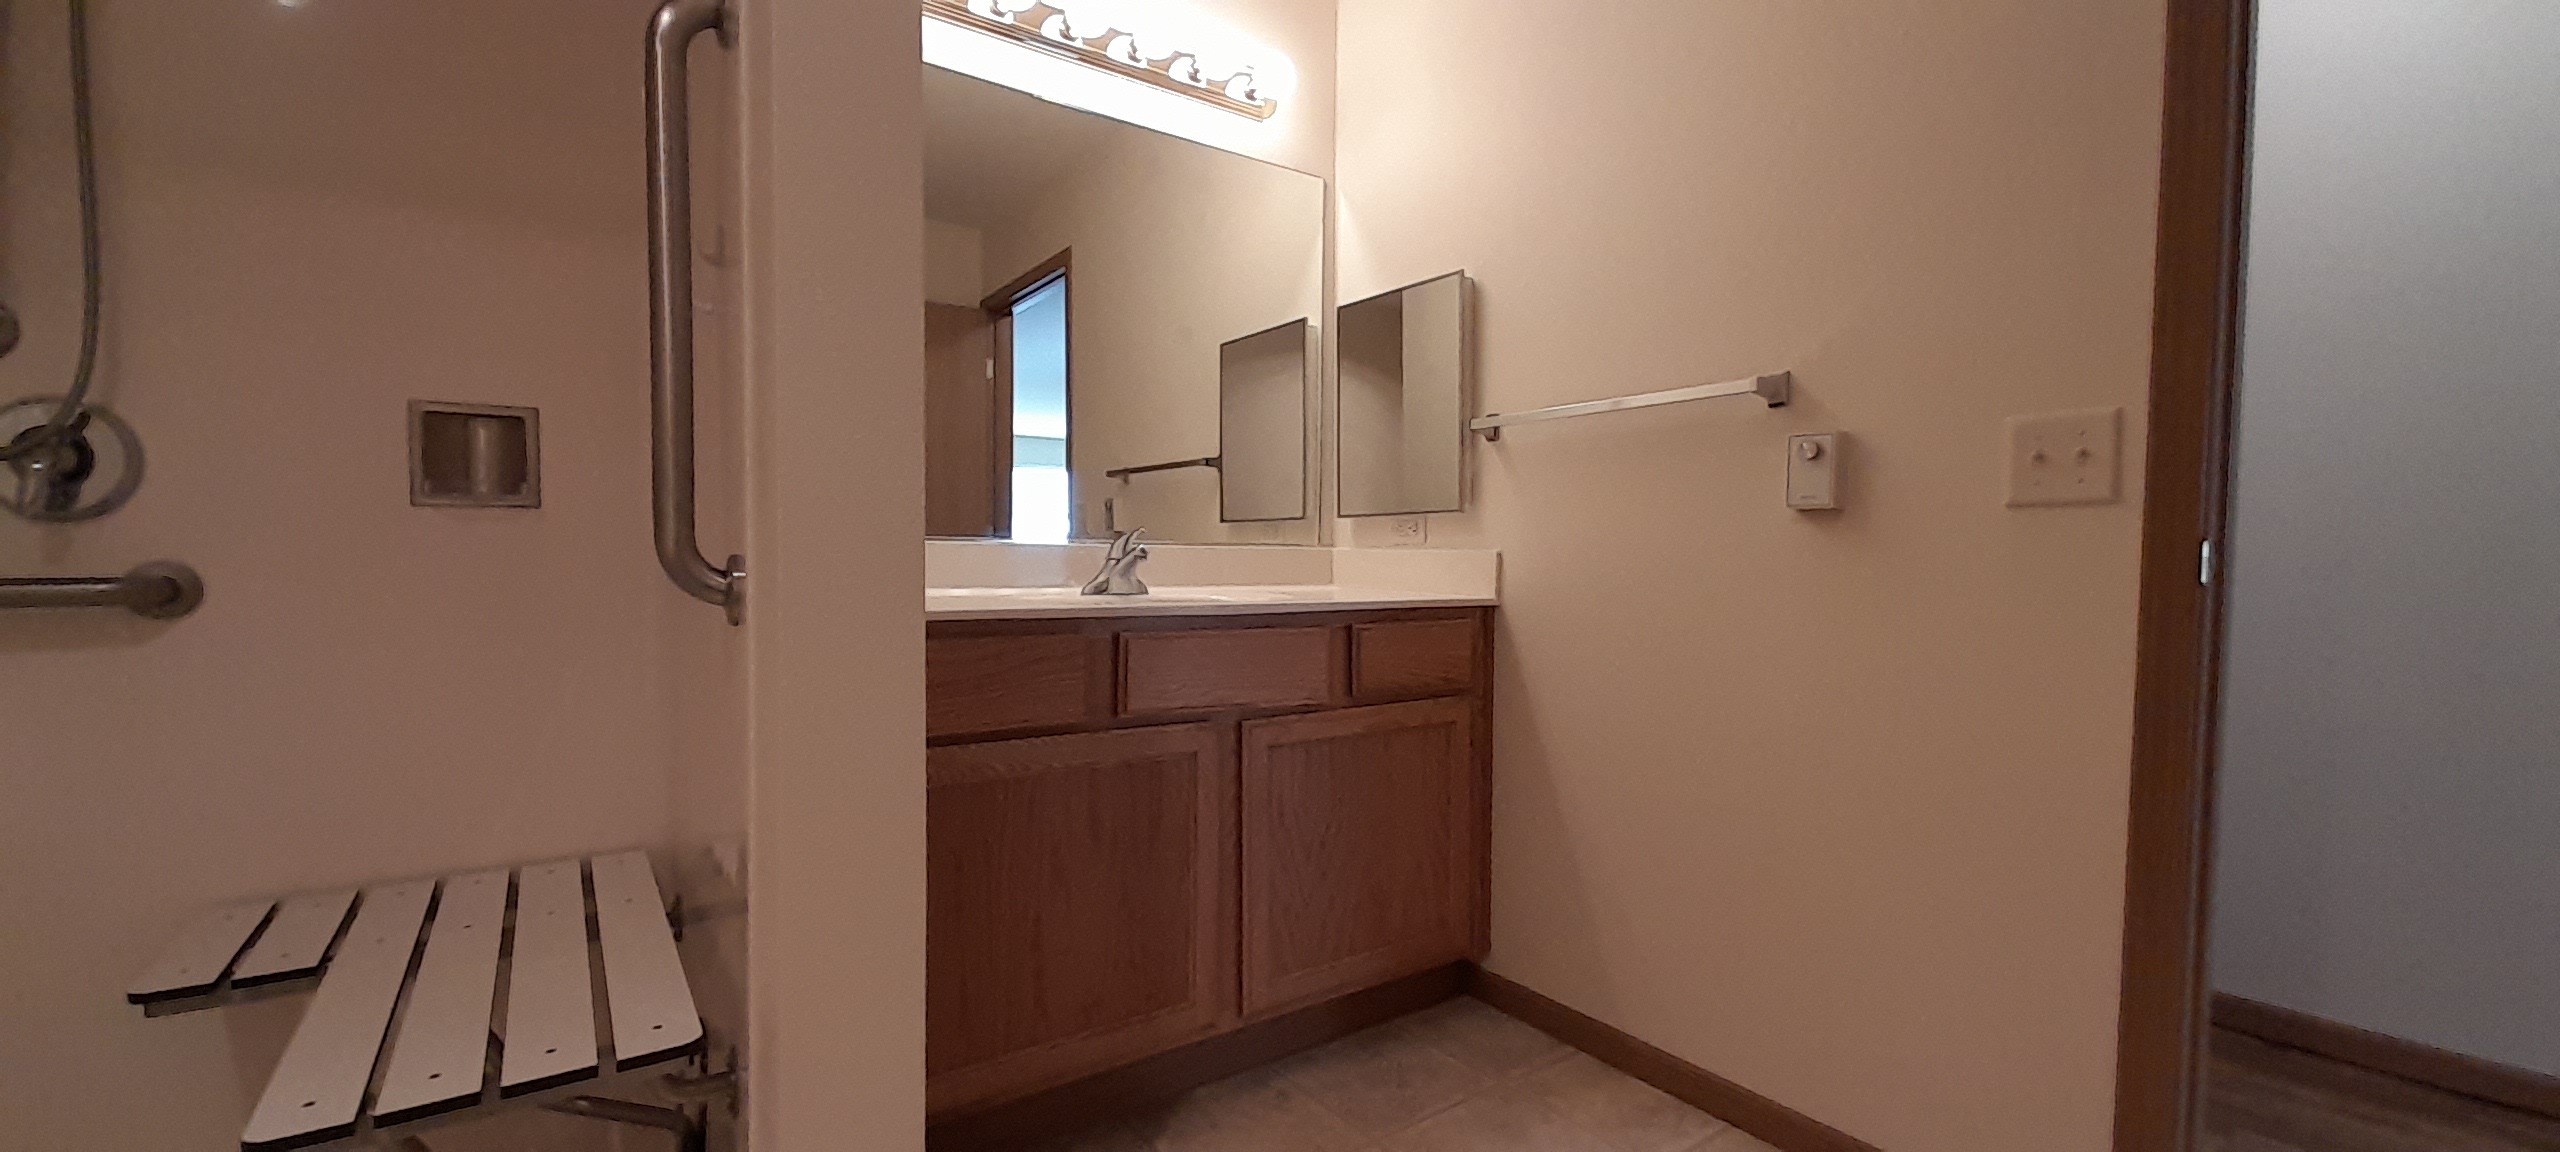 Iola SV bathroom vanity